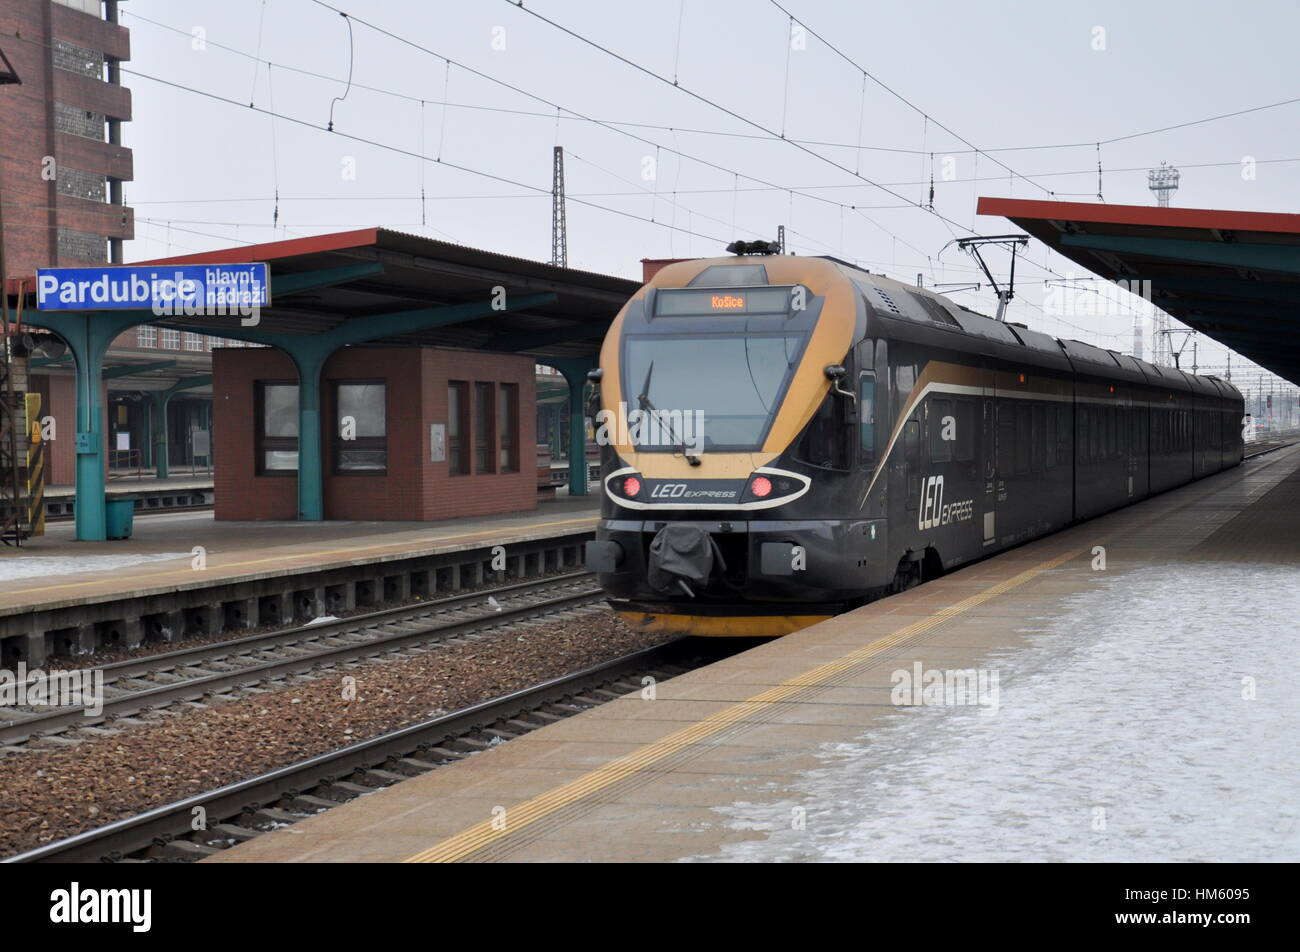 Electric Locomotive Company Leo Express train, transportation, railway, Pardubice Stock Photo